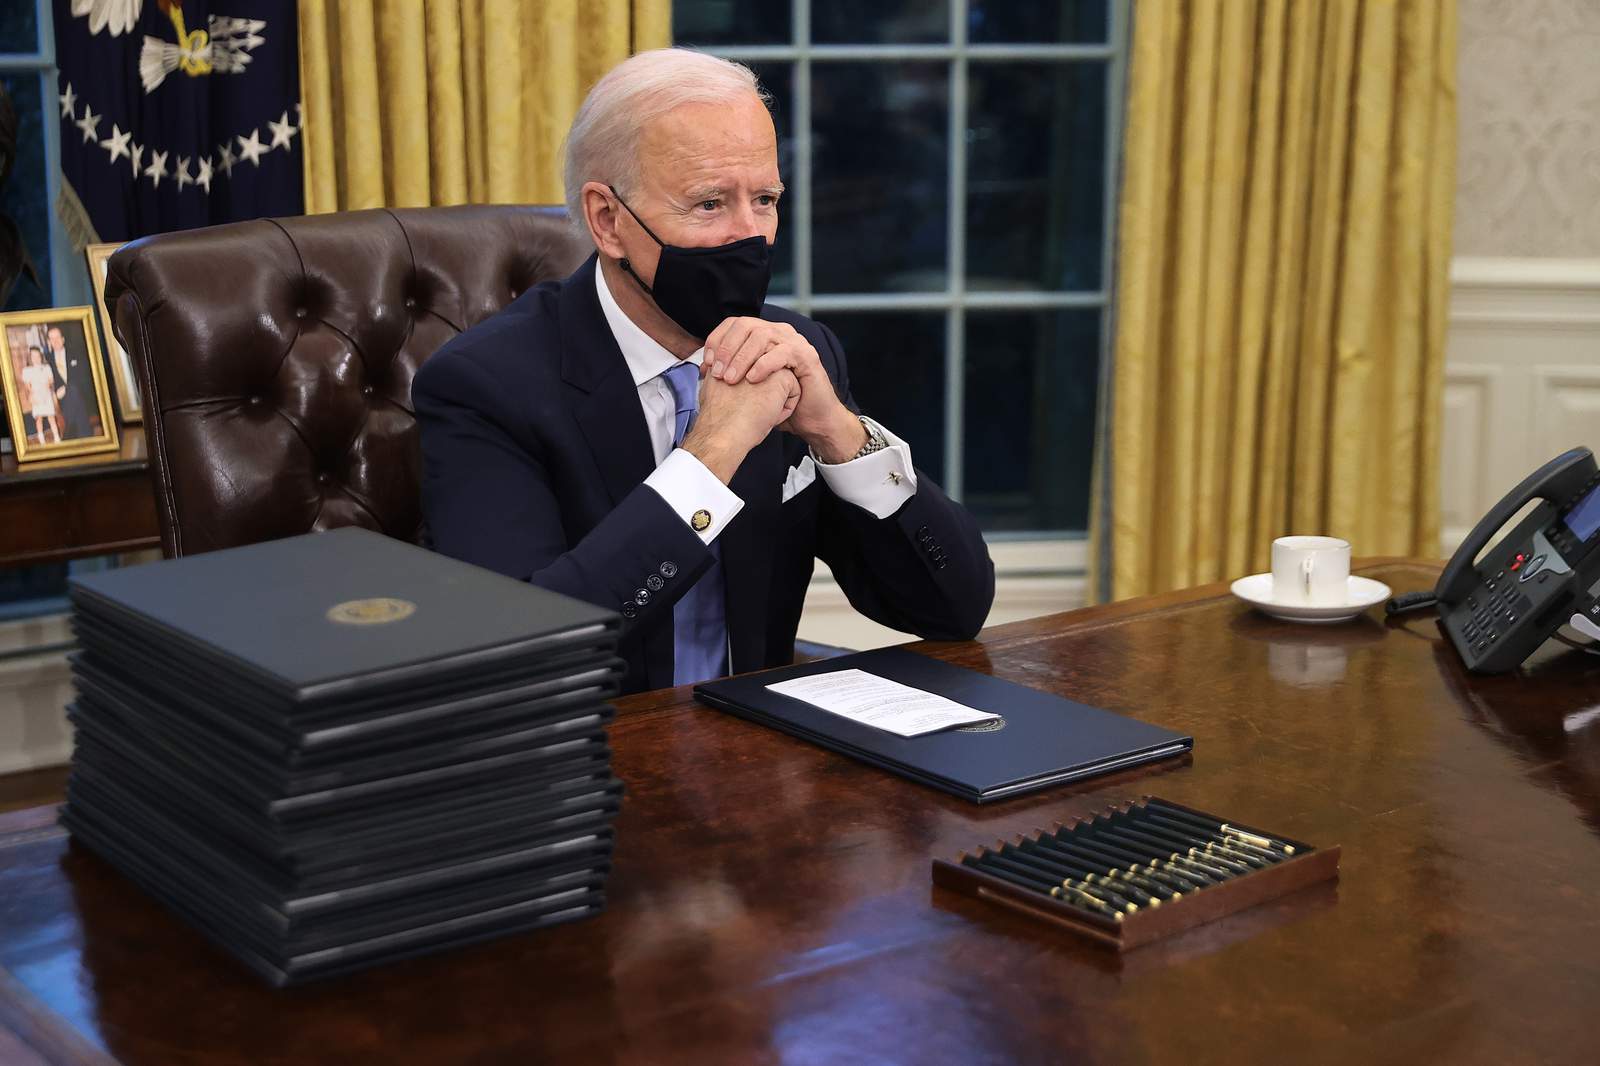 Live stream: President Joe Biden to discuss response to economic crisis, sign executive orders